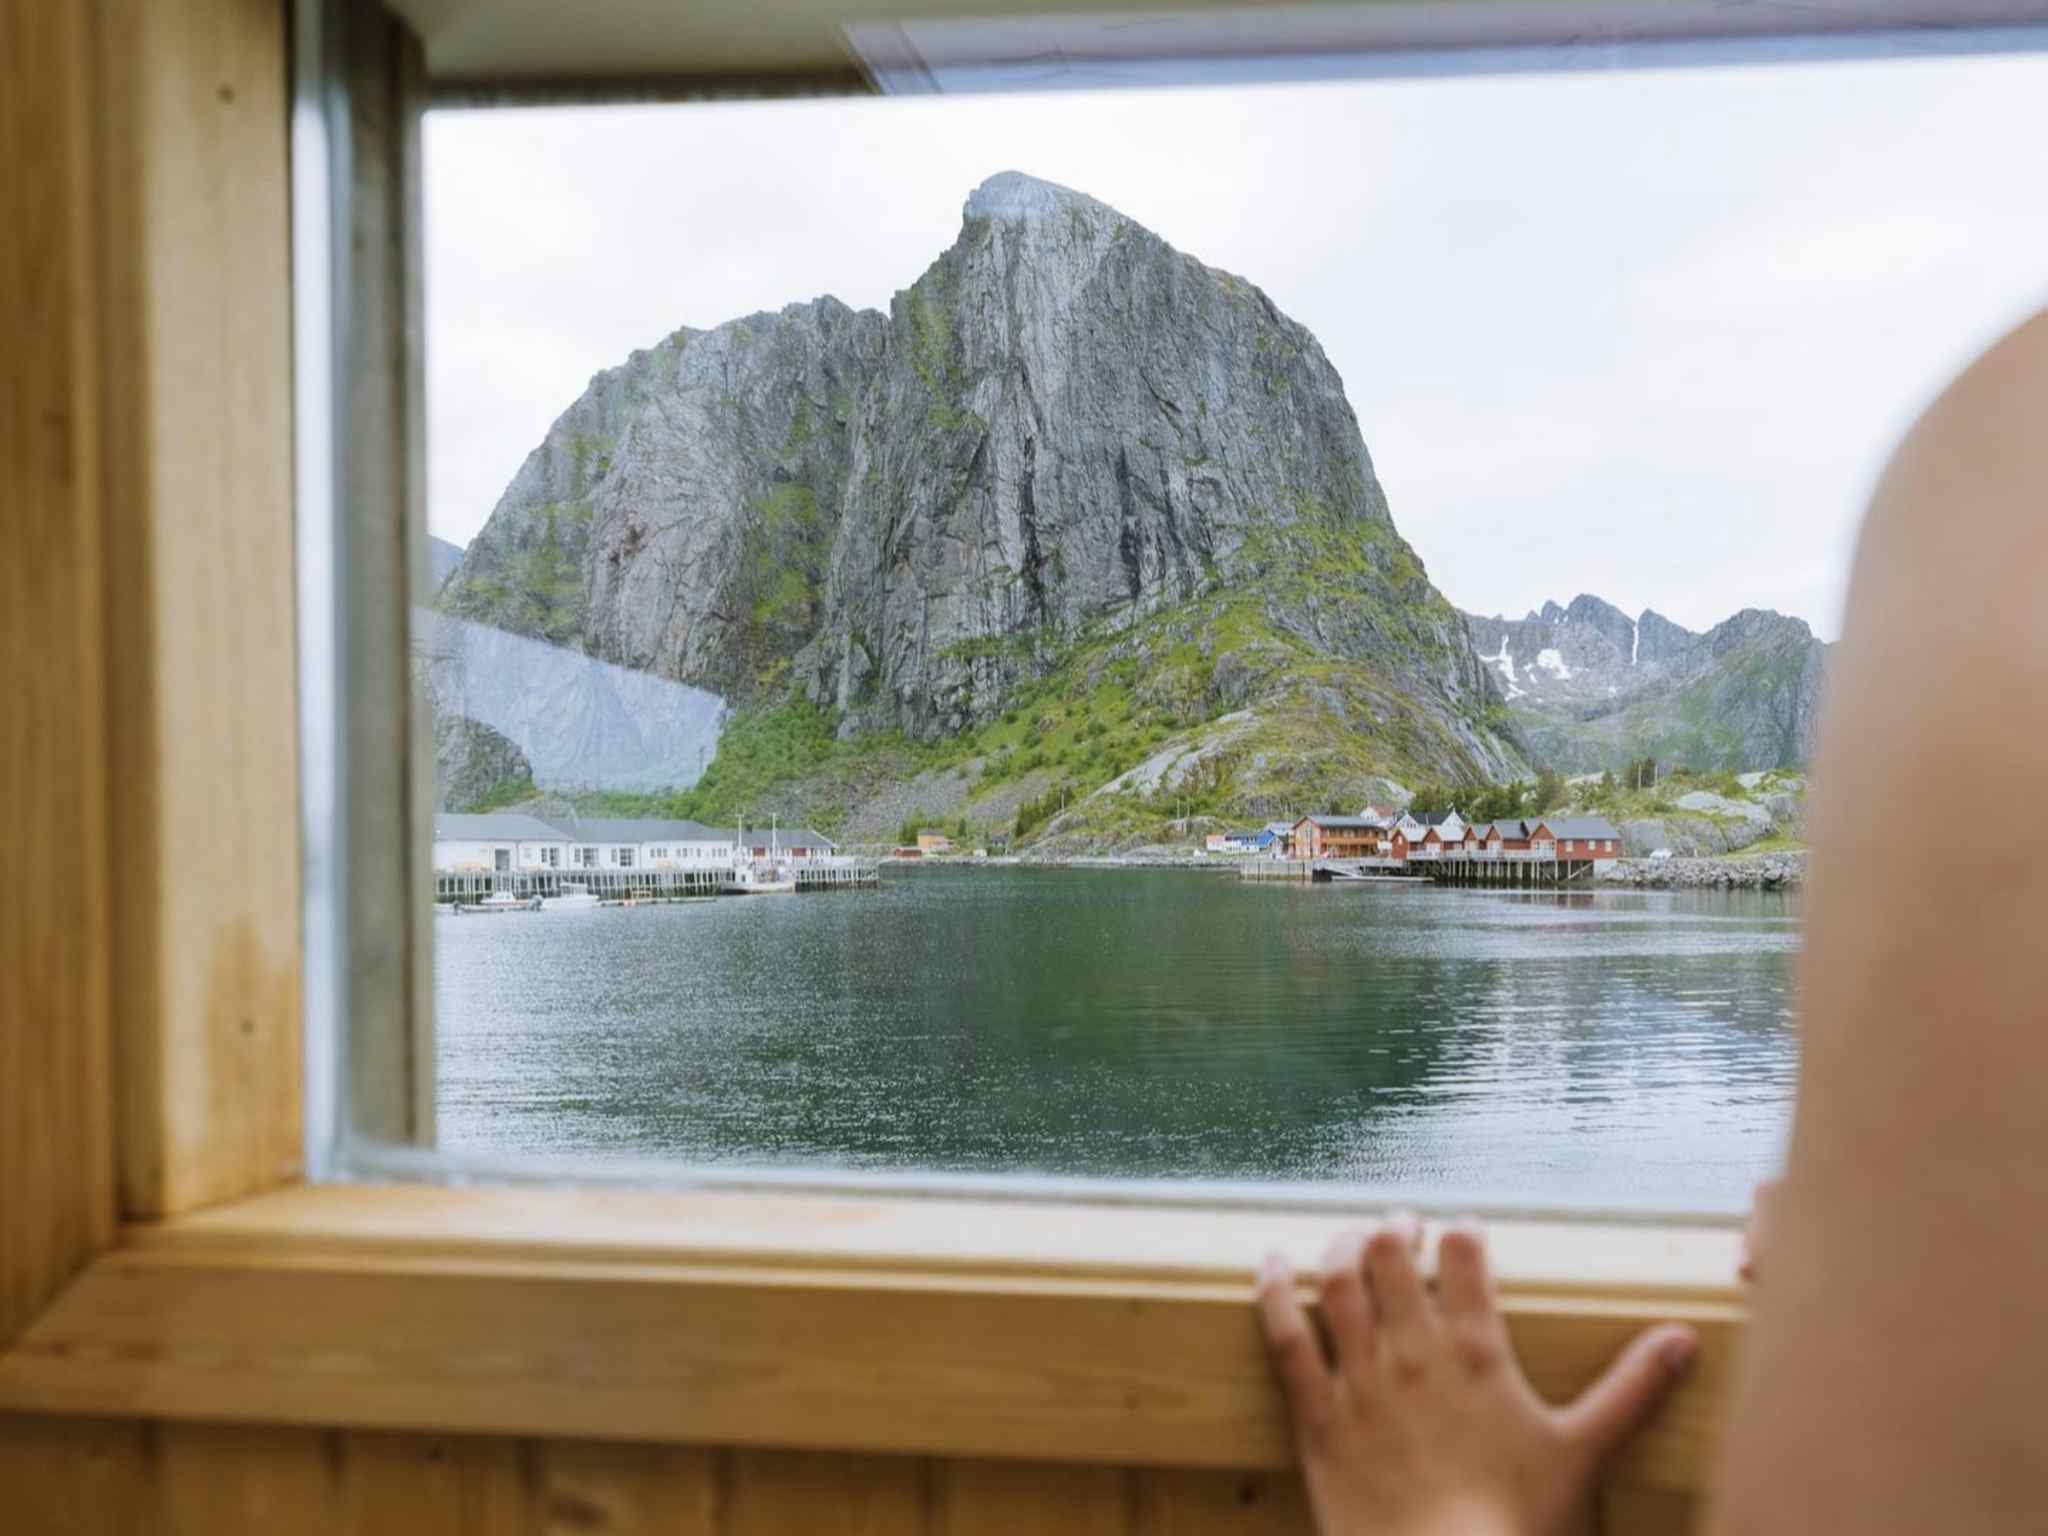 Sauna, Lofoten, Norway
Host image: Pukka Travels